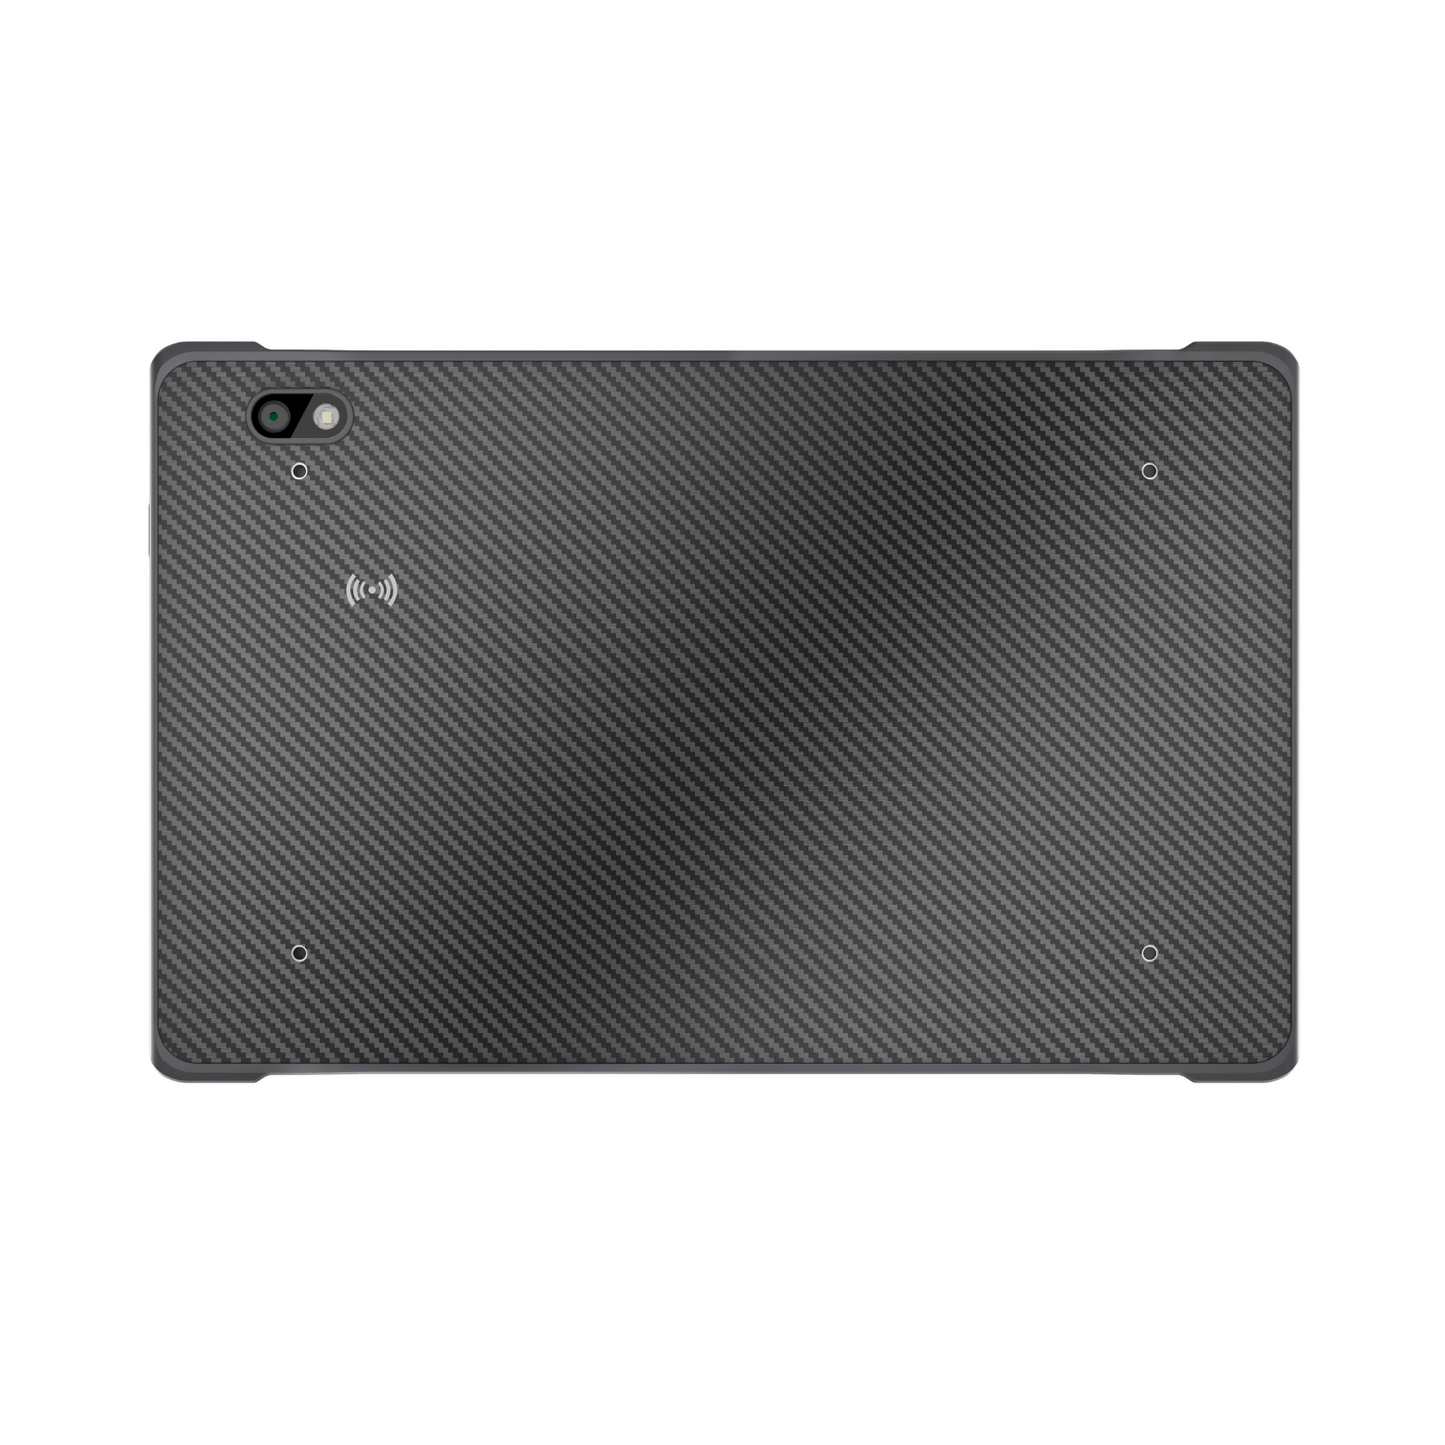 RT08, tablet robusta, tablet android, rugged tablet, industrial rugged tablet, tableta robusta android, logistica, industria, logistics tablet